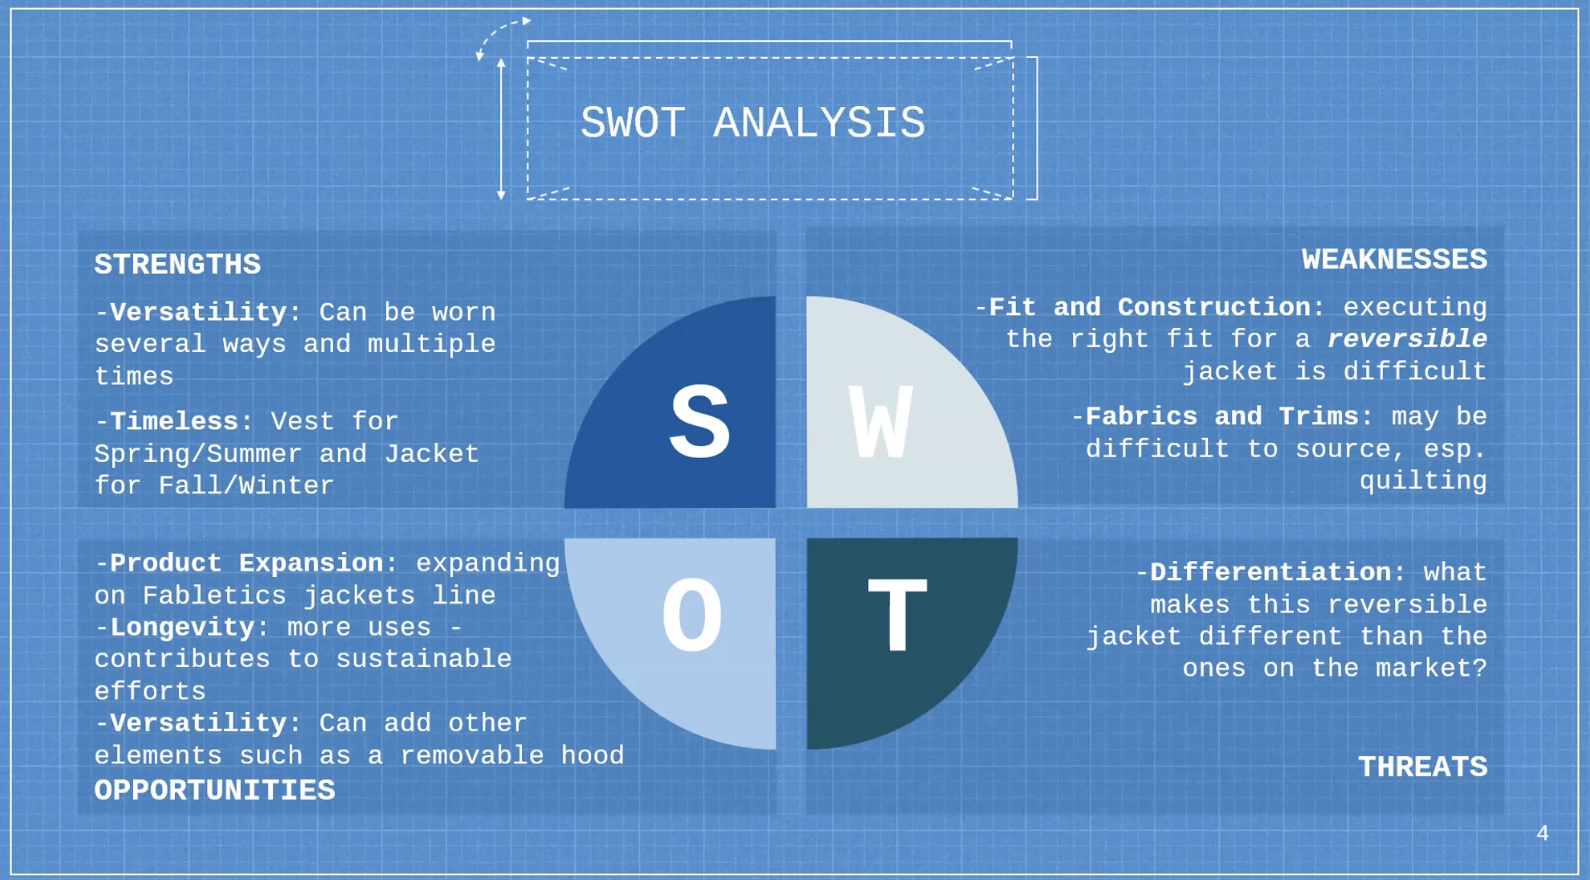 SWOT analysis by FIDM student Aliah Mae Alzona